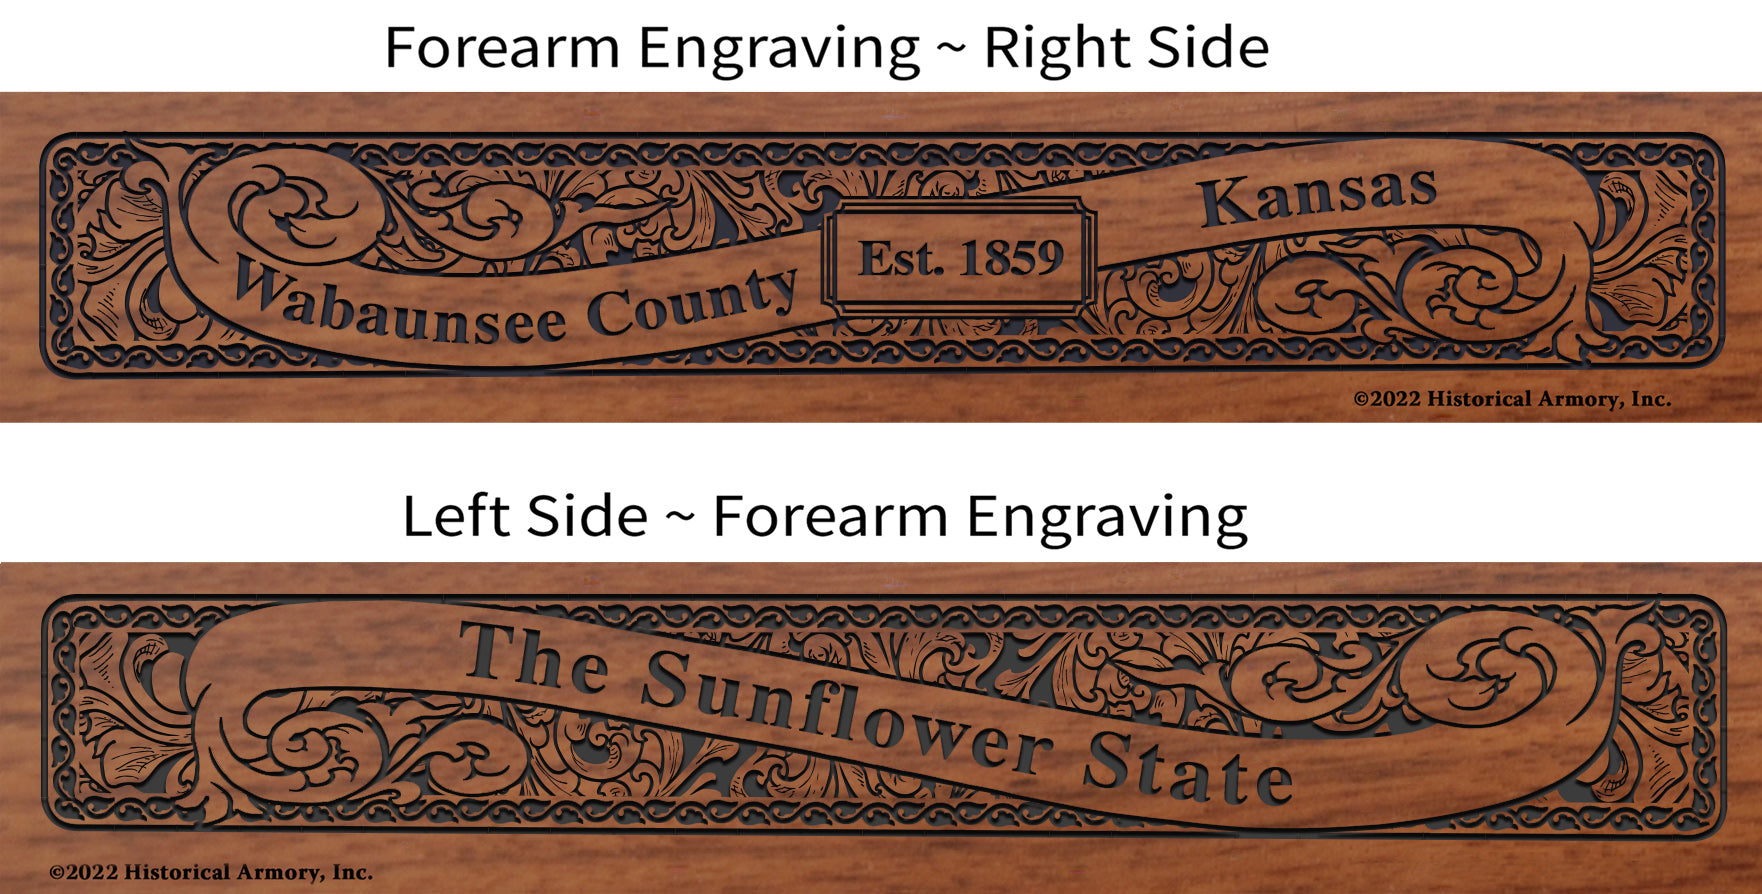 Wabaunsee County Kansas Engraved Rifle Forearm